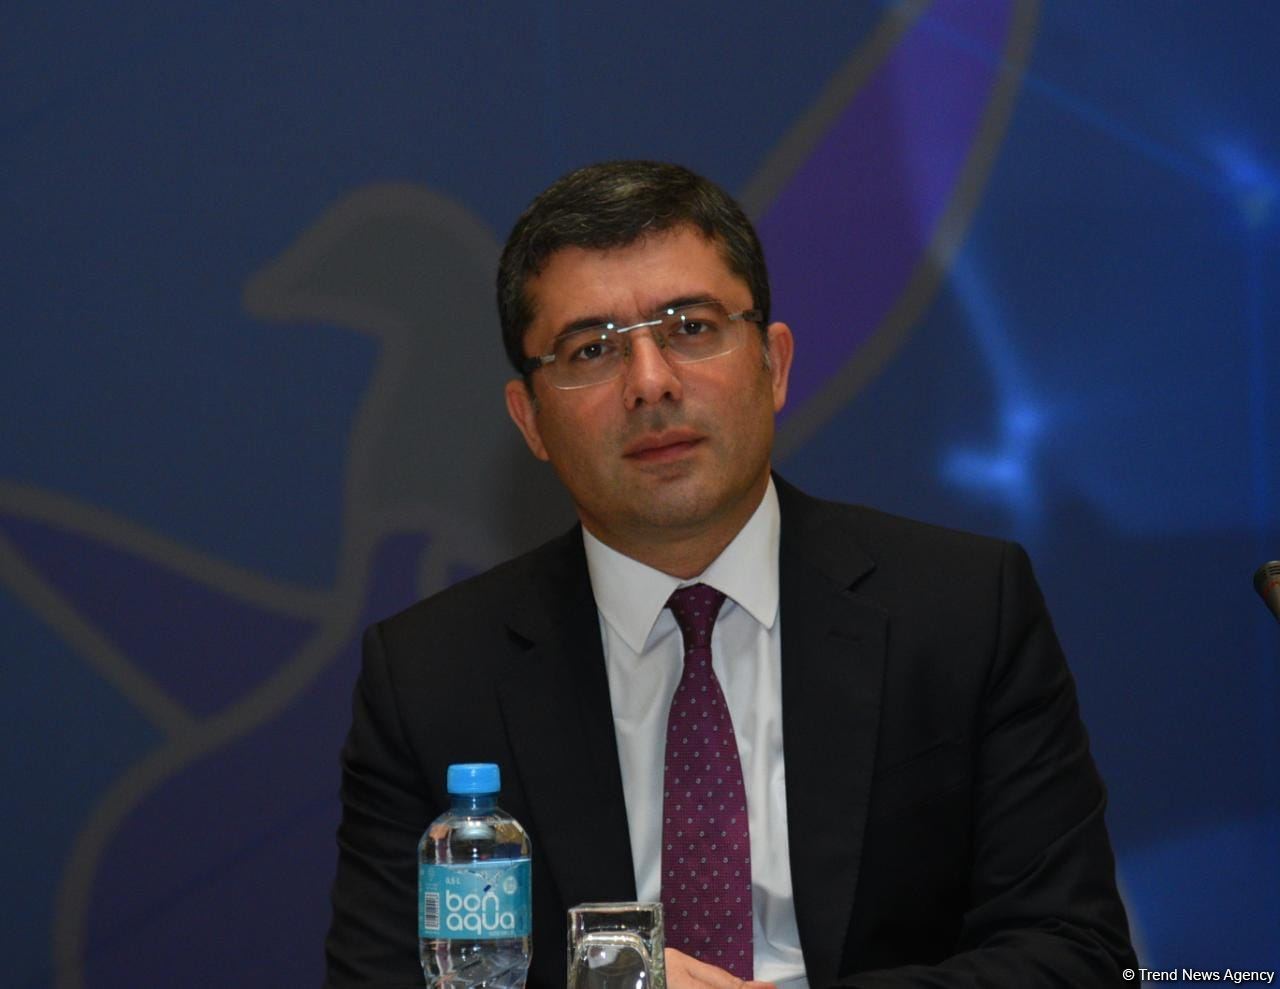 Ties between Turkic states to be strengthened in media field - Azerbaijan's media development agency